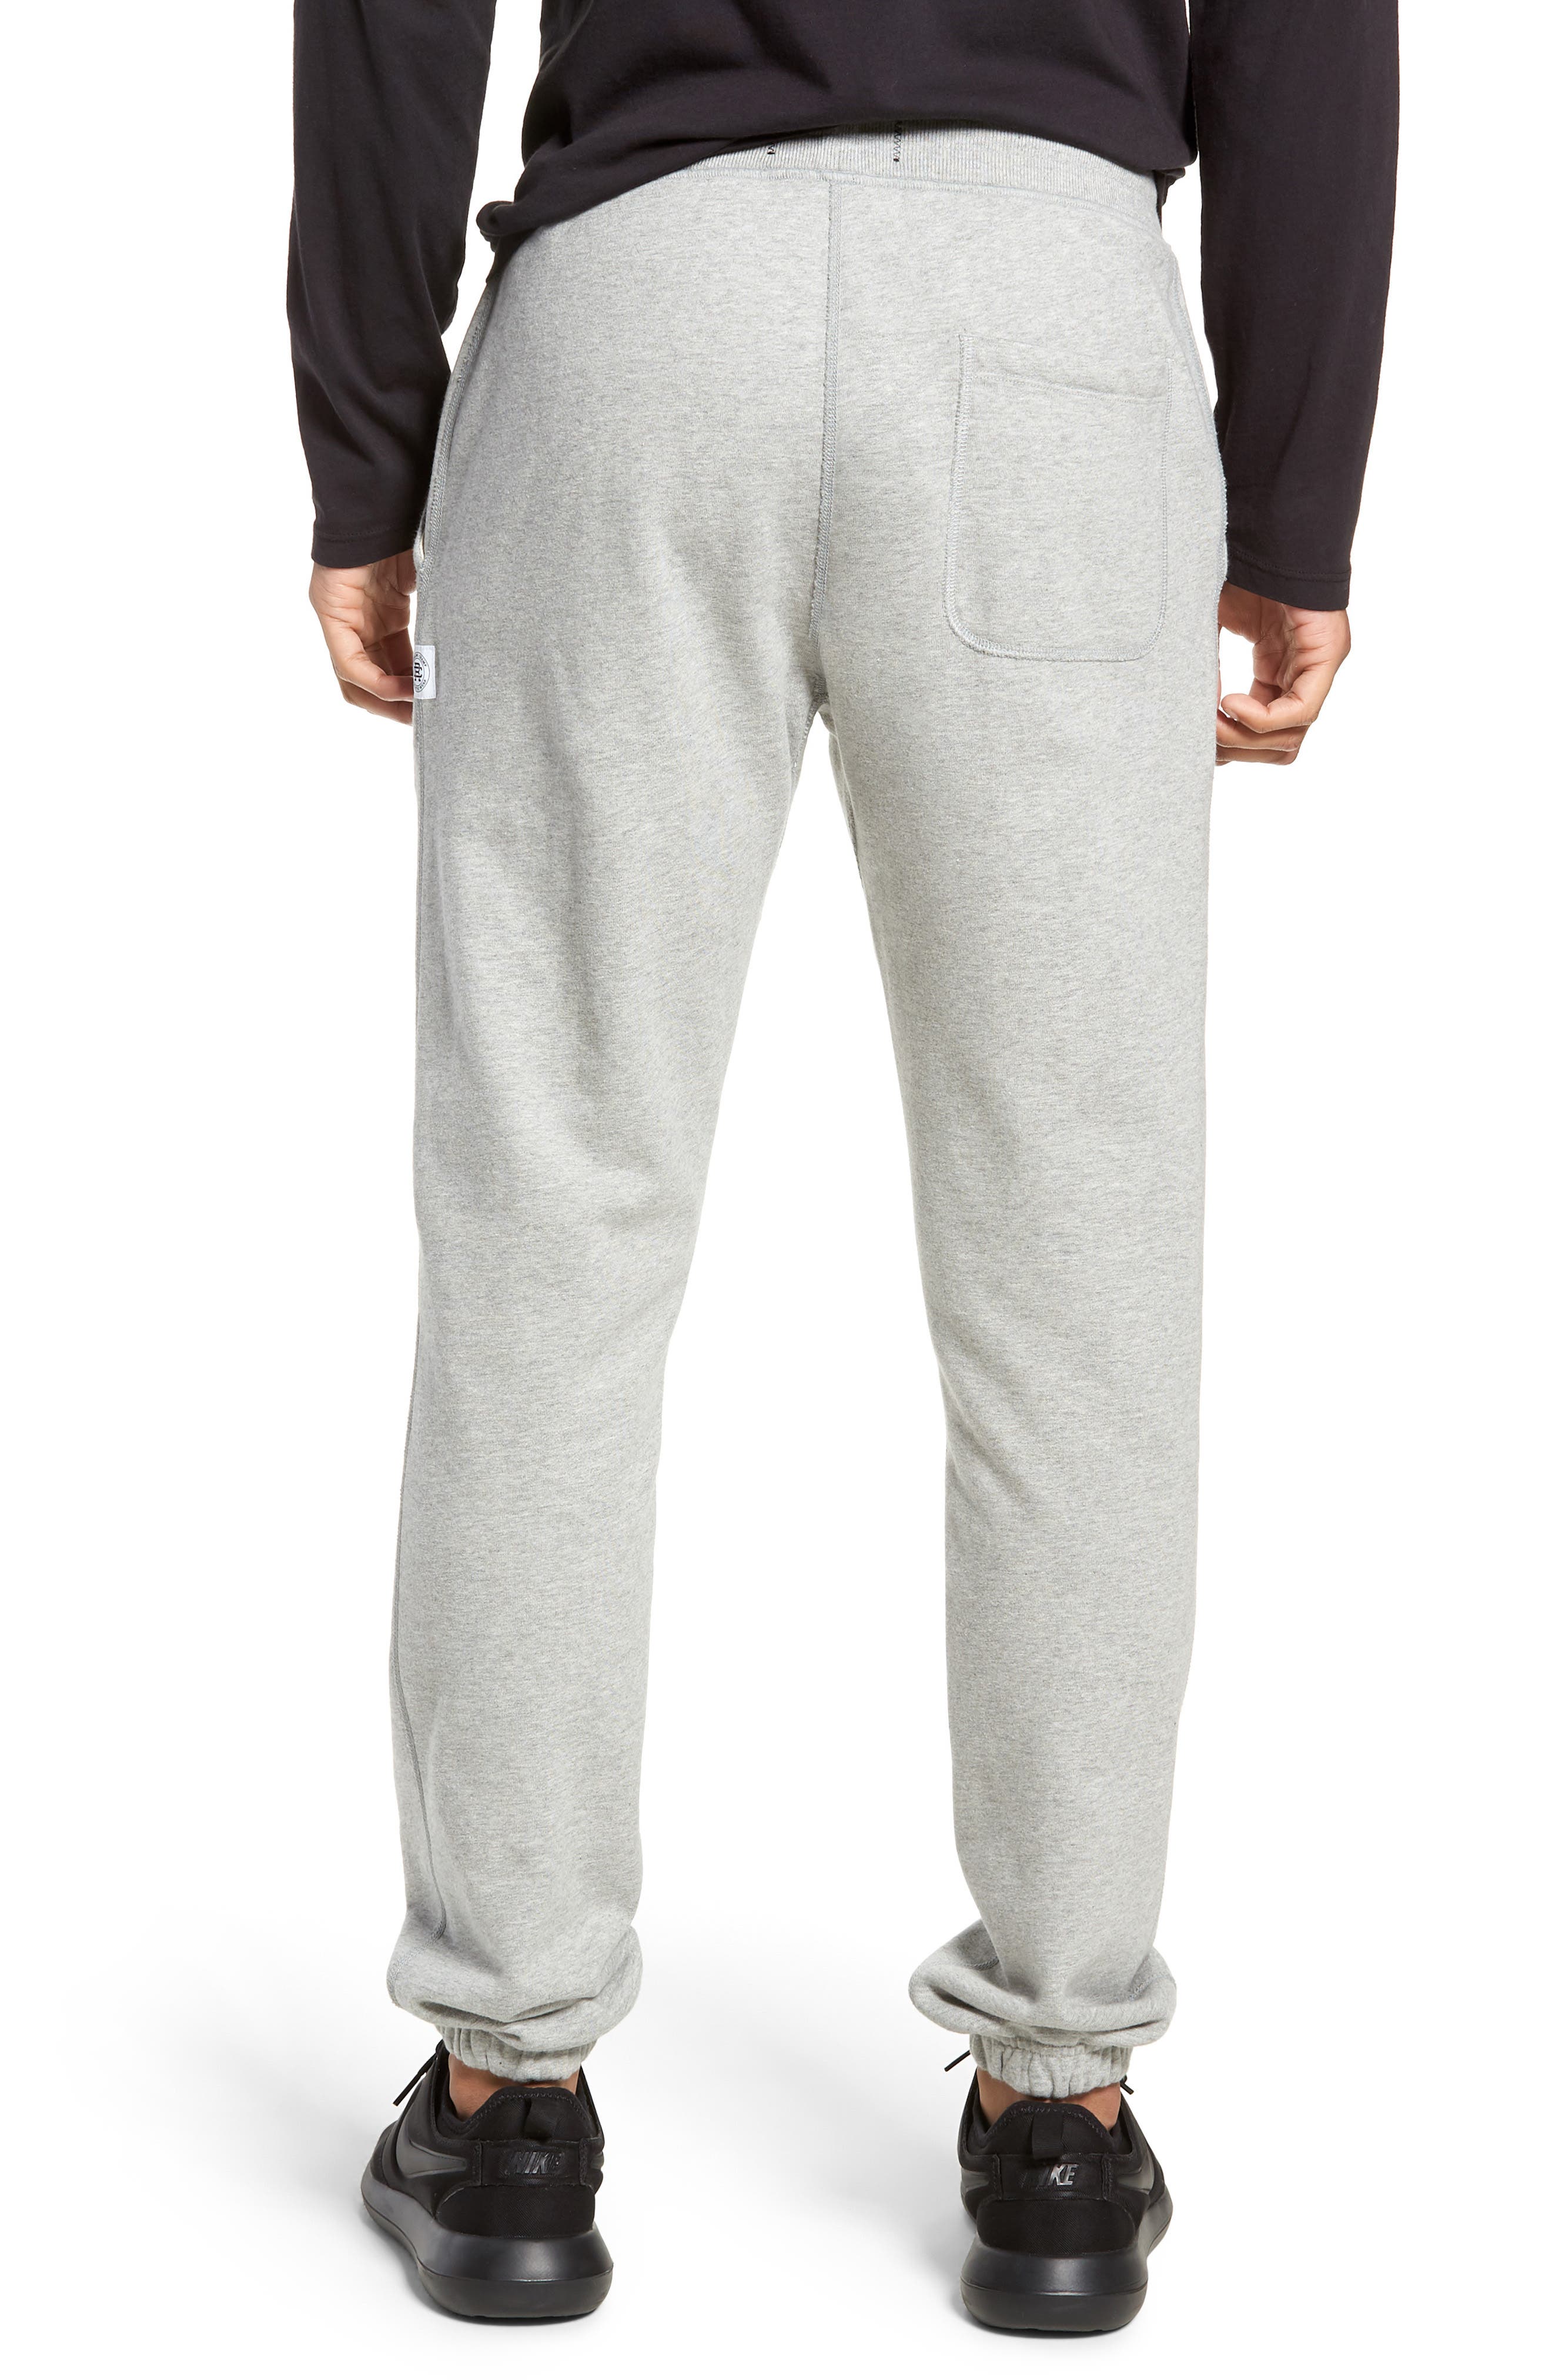 Rocawear Mens Size 2XL Grey Zipper Pocket Skinny Fit Sweat Jogger Pants New 